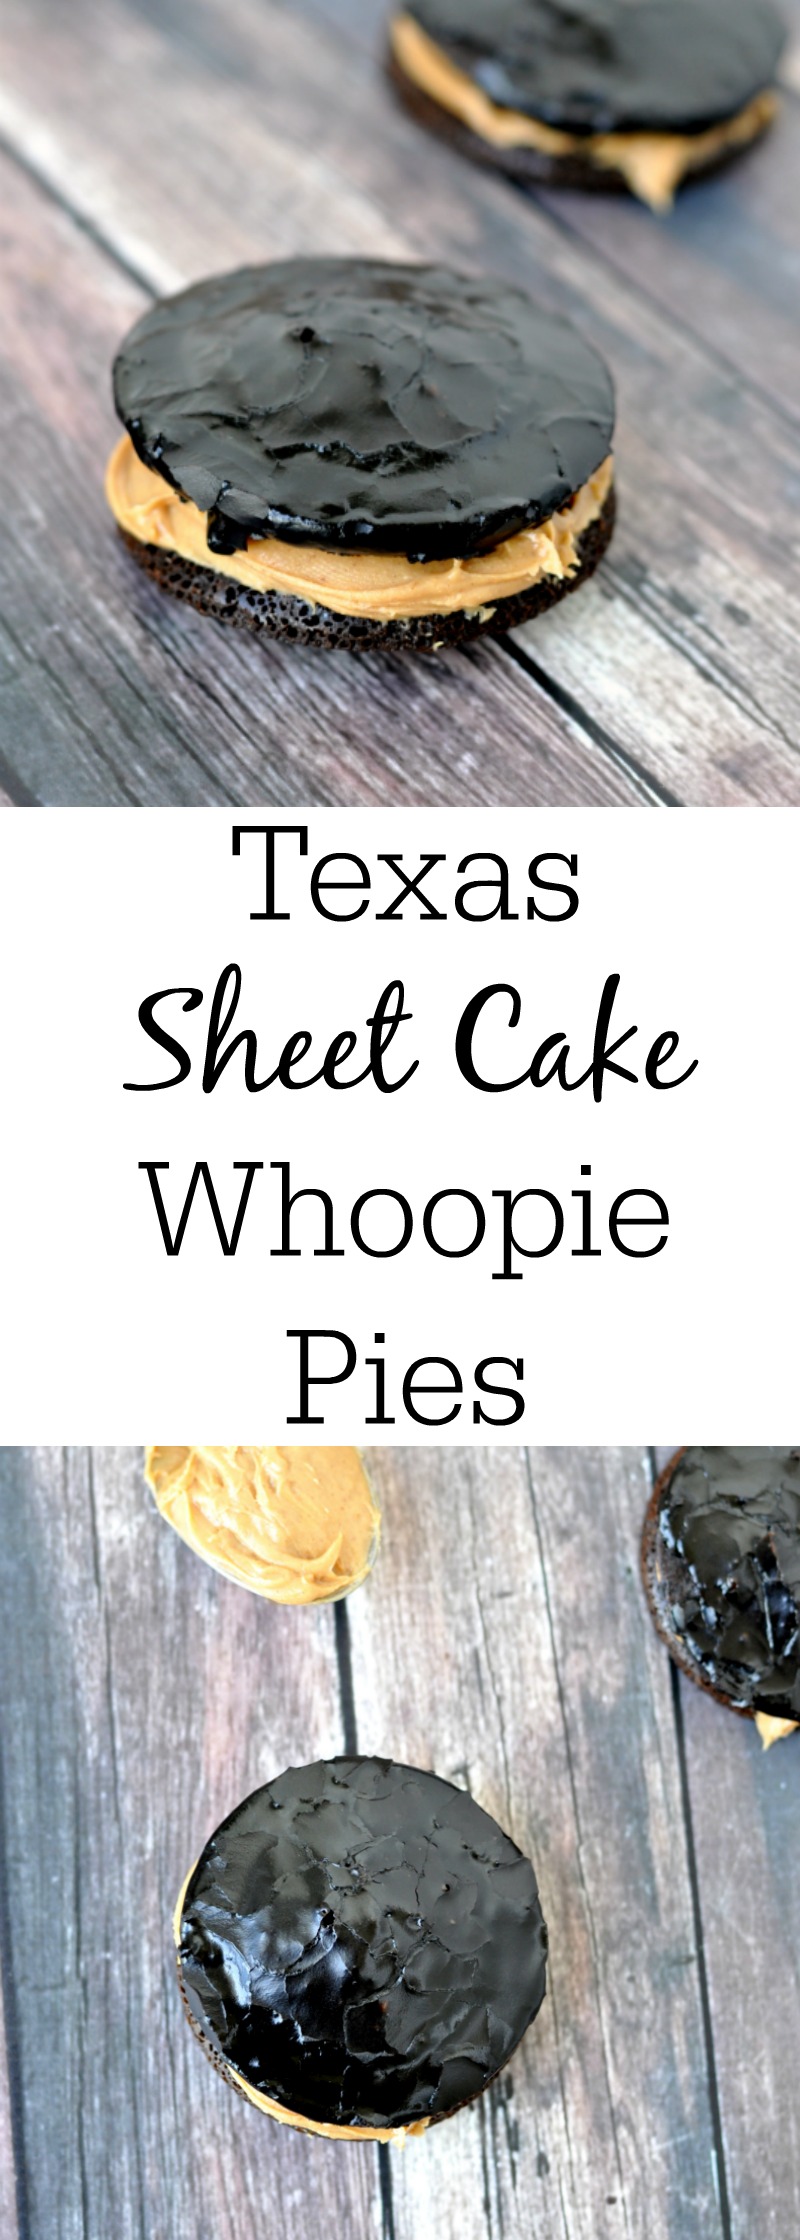 Texas Sheet Cake Whoopie Pies